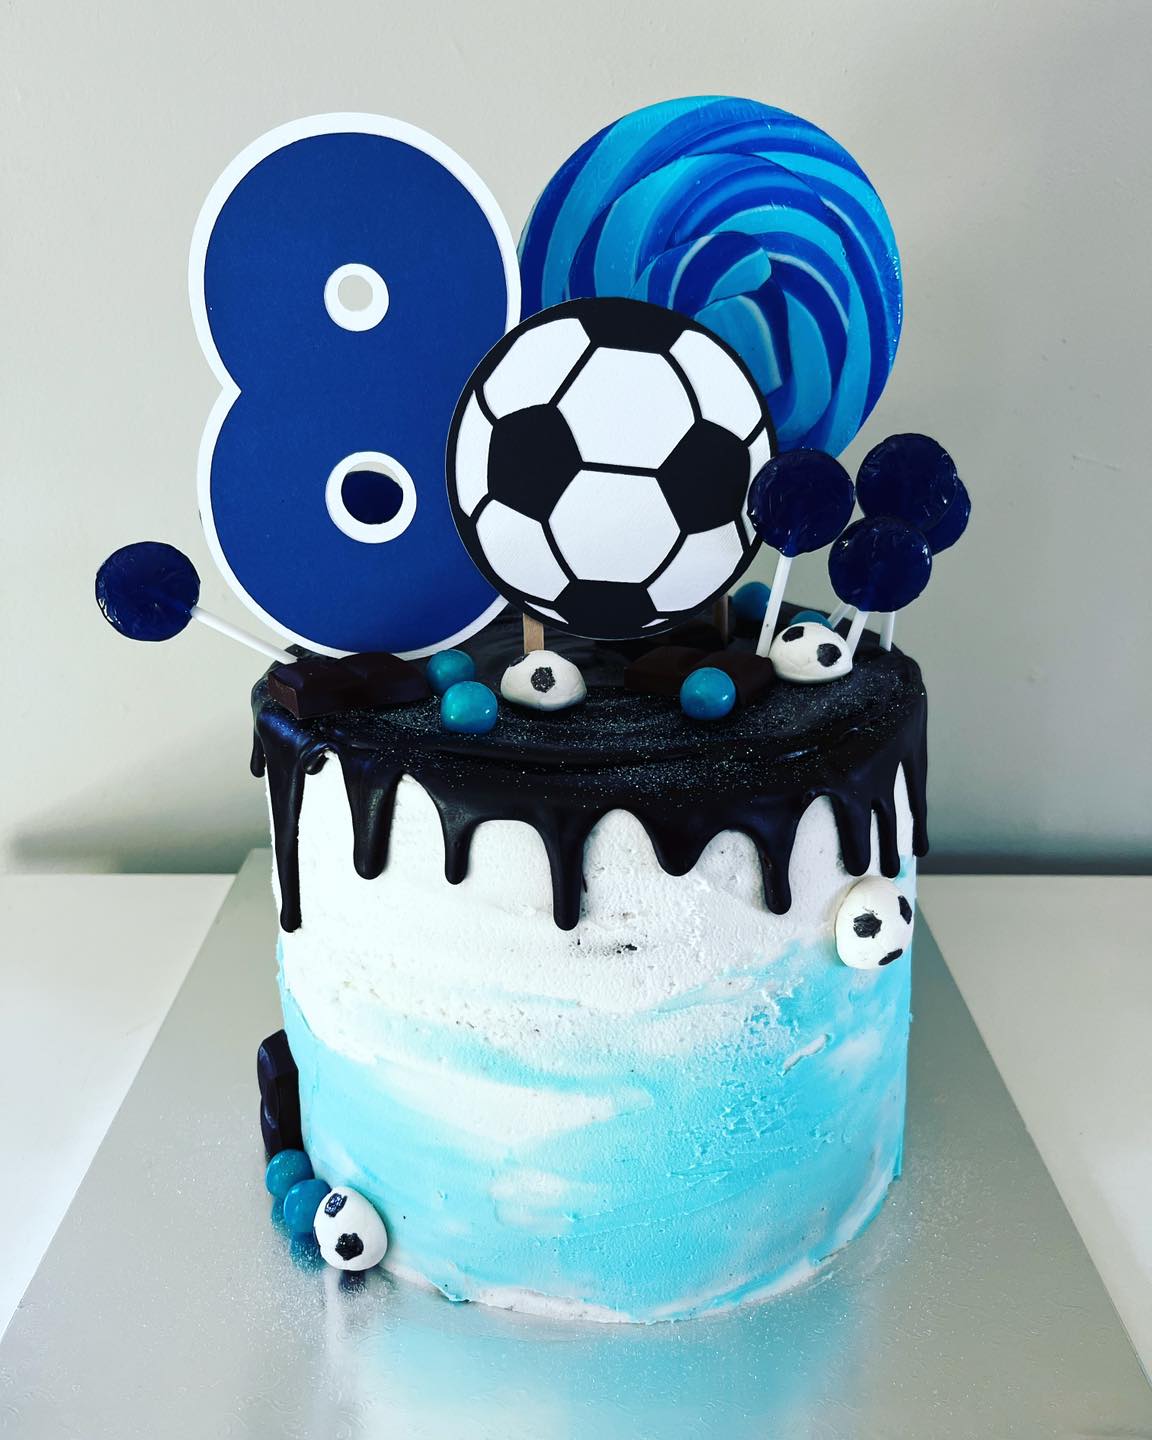 Soccer cake, cape town cakes, novelty cakes, birthday cakes, southern peninsula cakes, cake decorating